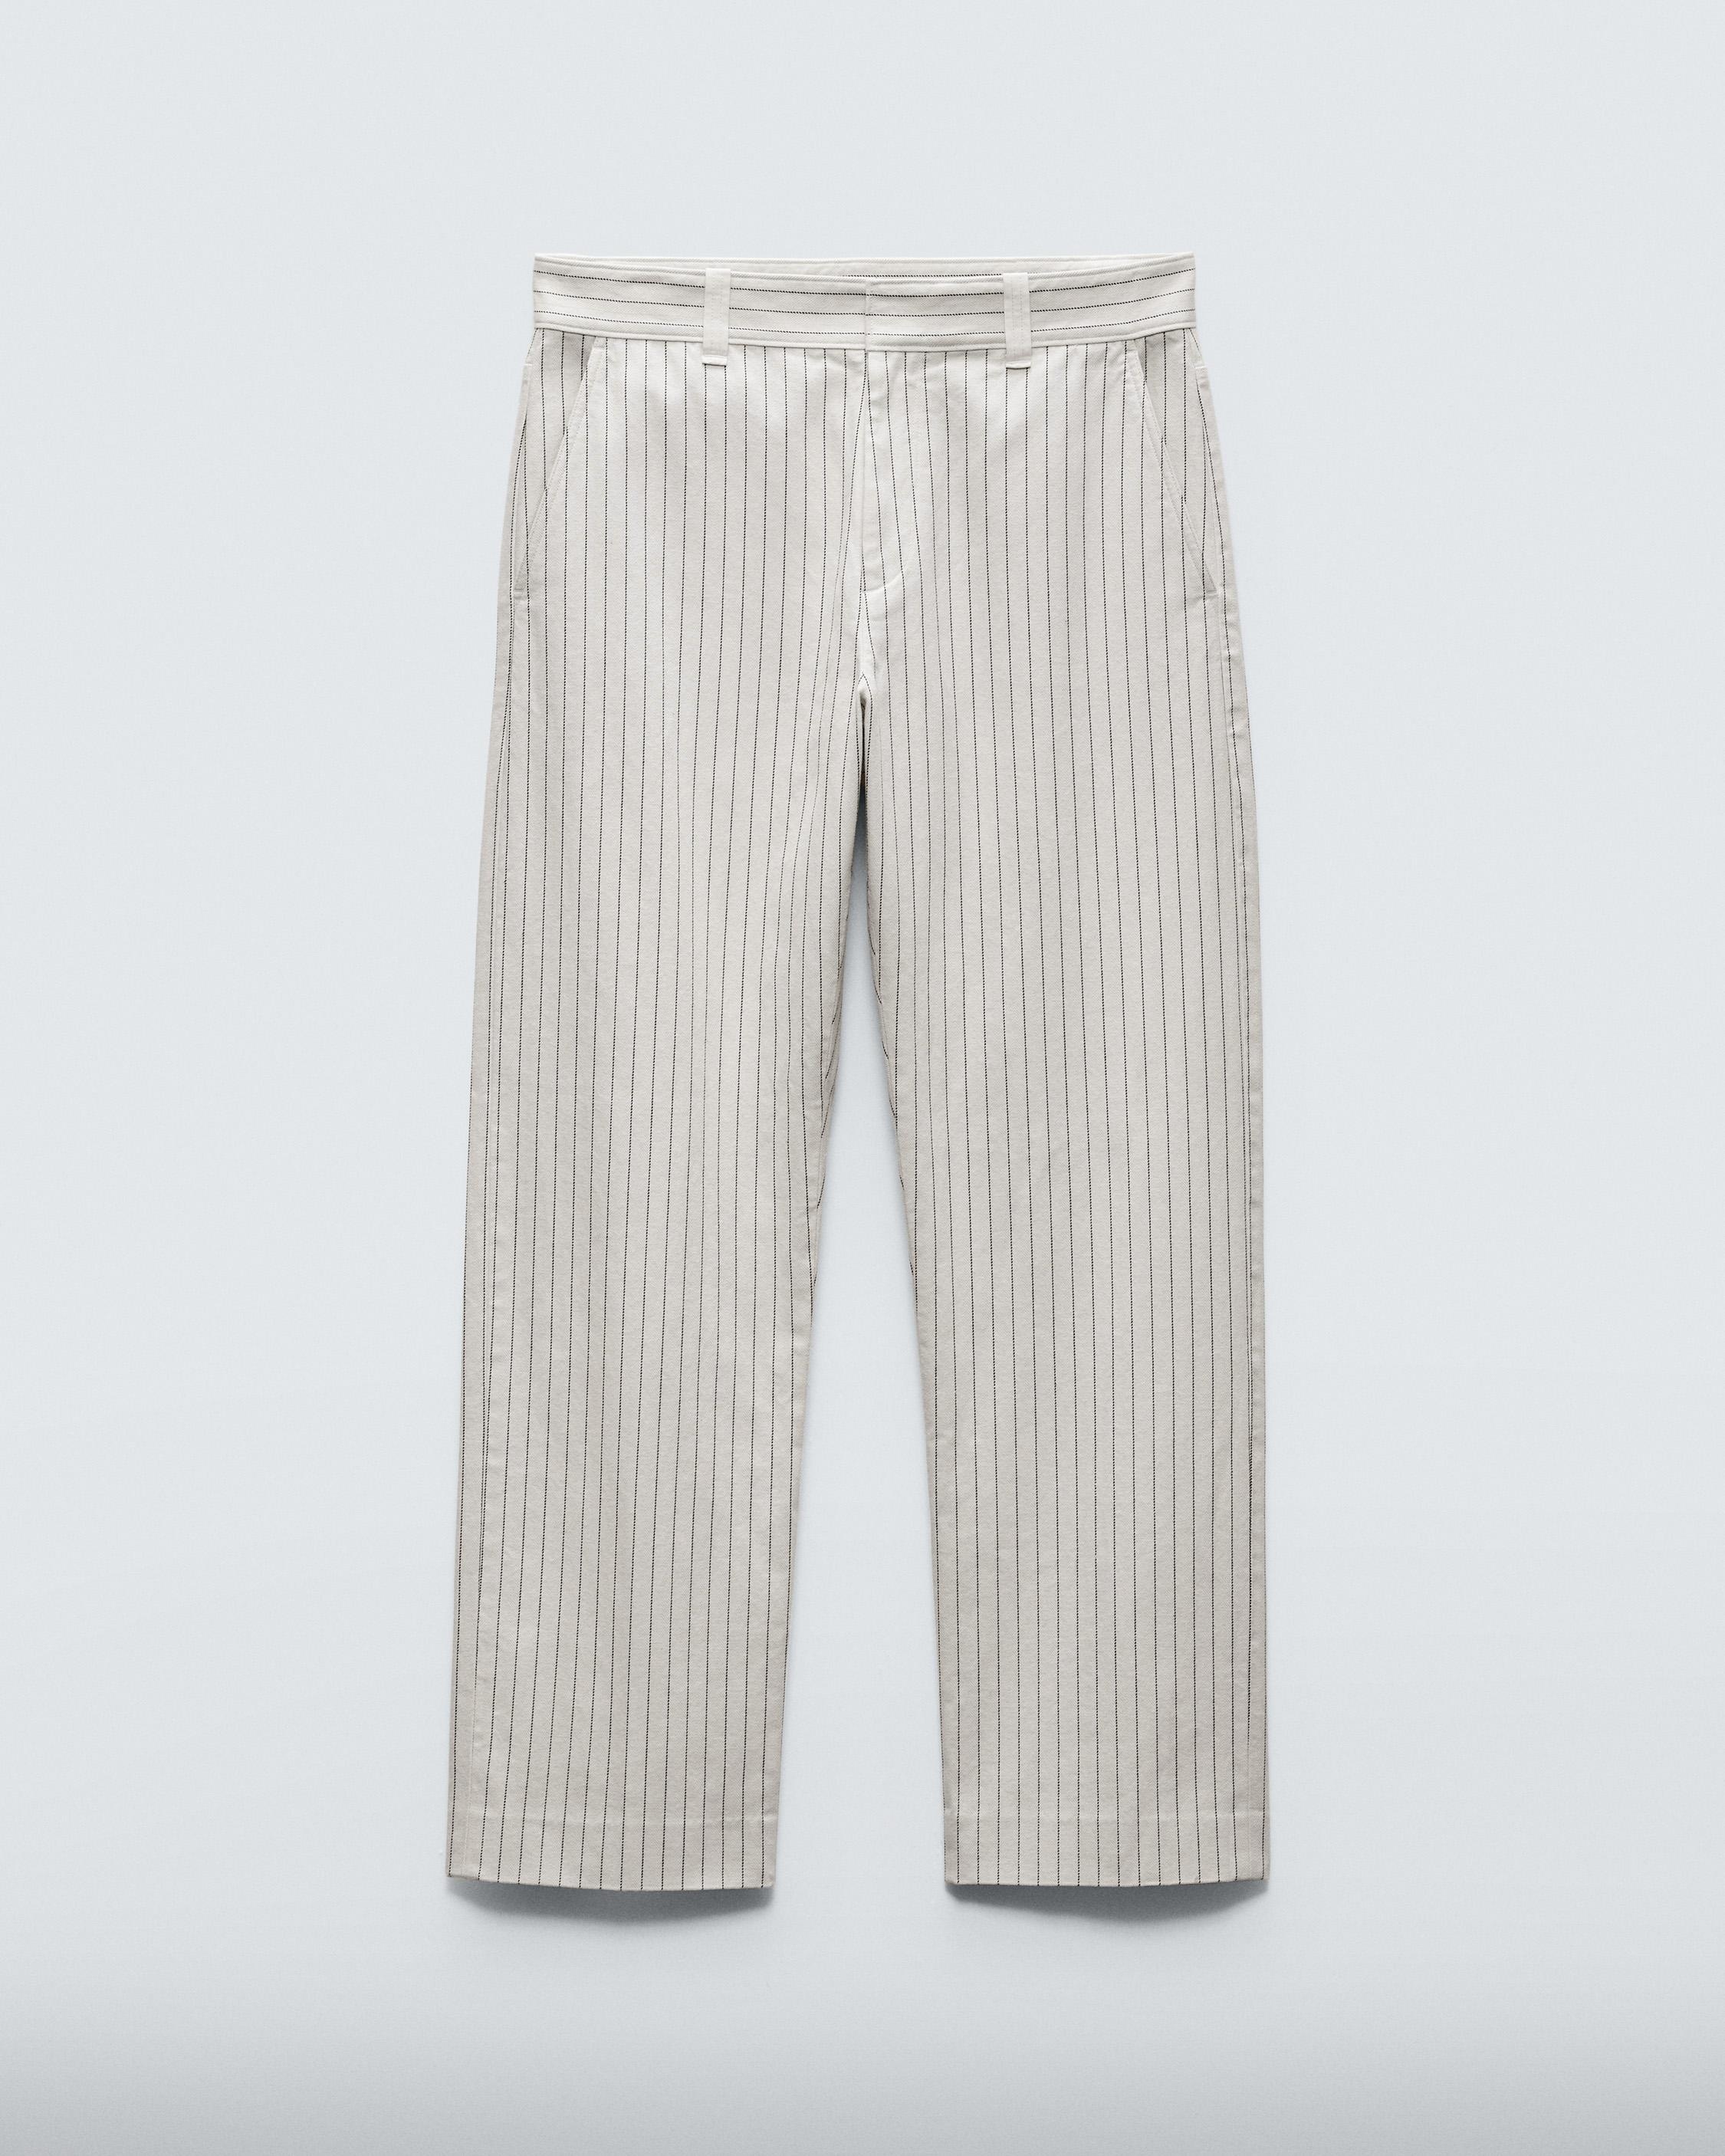 Haydon Cotton Herringbone Pant
Classic Fit - 1